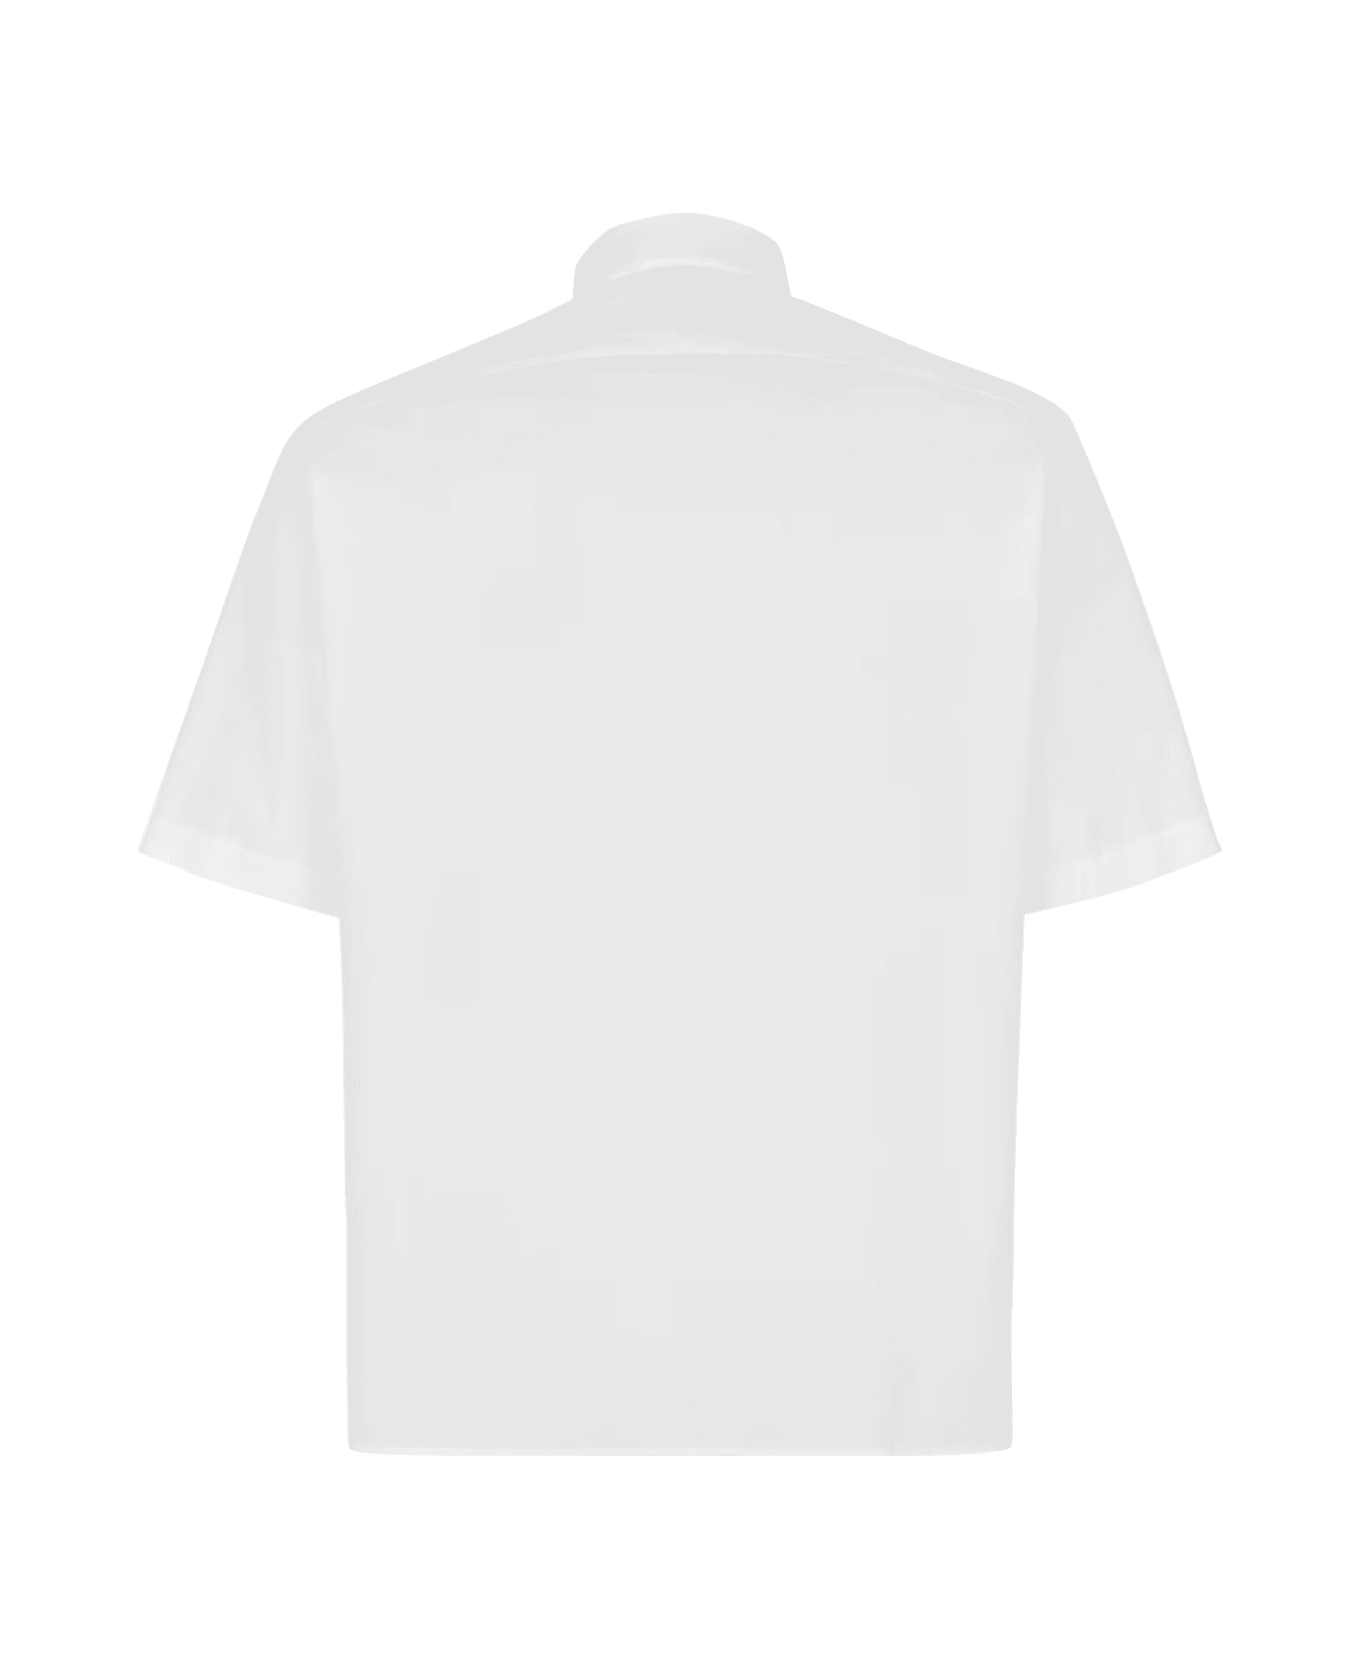 Fendi Shirt Co Roma Pocket - White